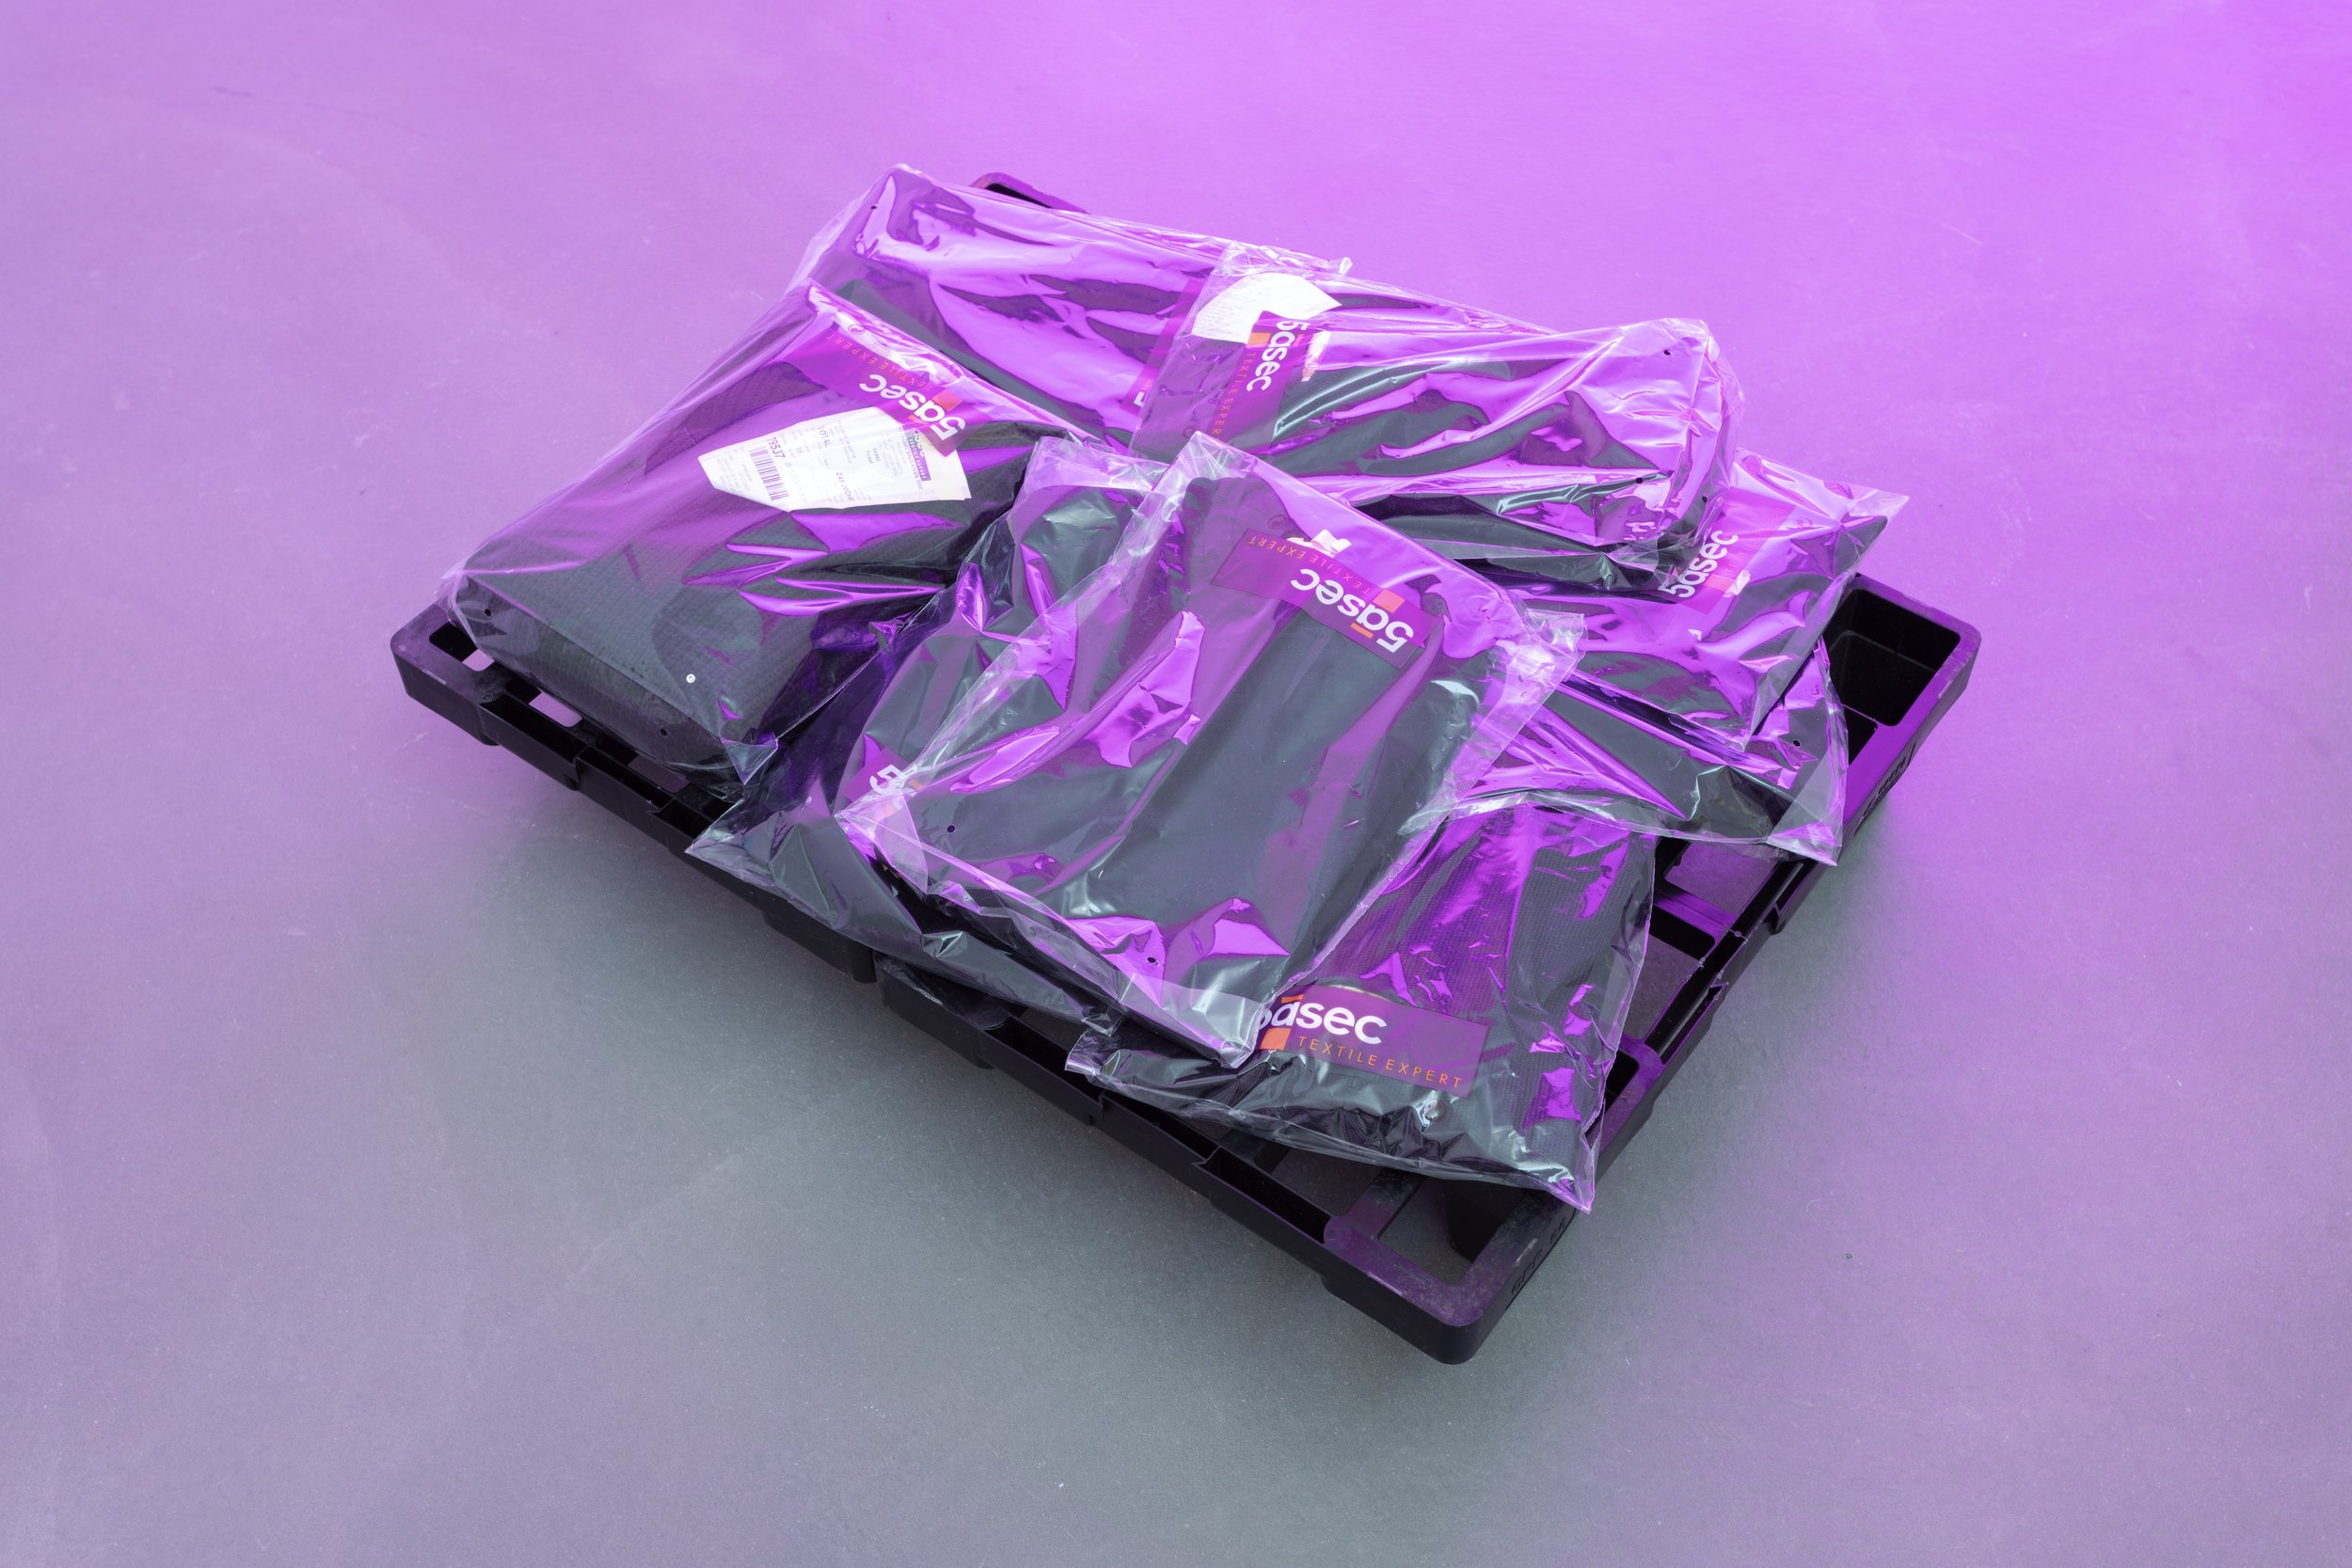    S.M. (Genève) , 2023, Pullovers, plastic film, plastic palette, 80 x 60 x 15 cm 